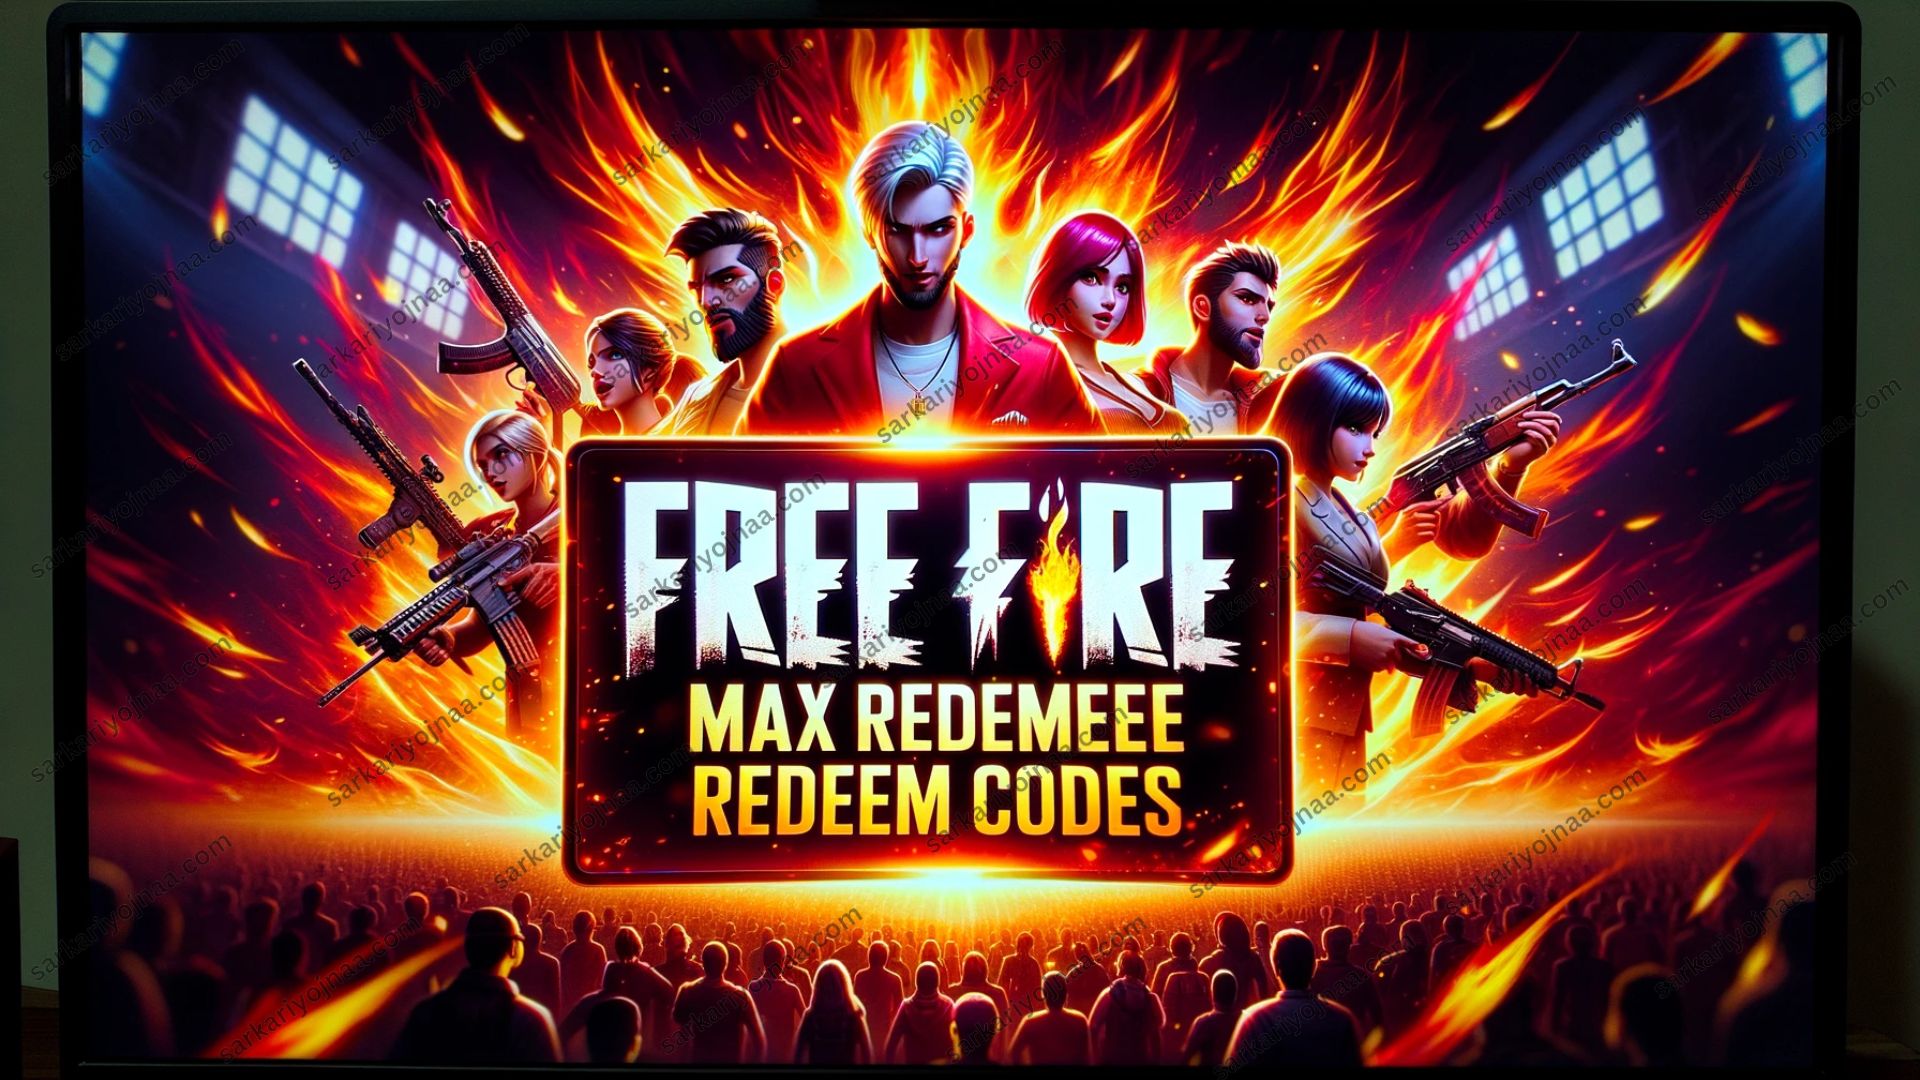 Free fire redeem codes today - Garena Free Fire Max Redeem Codes